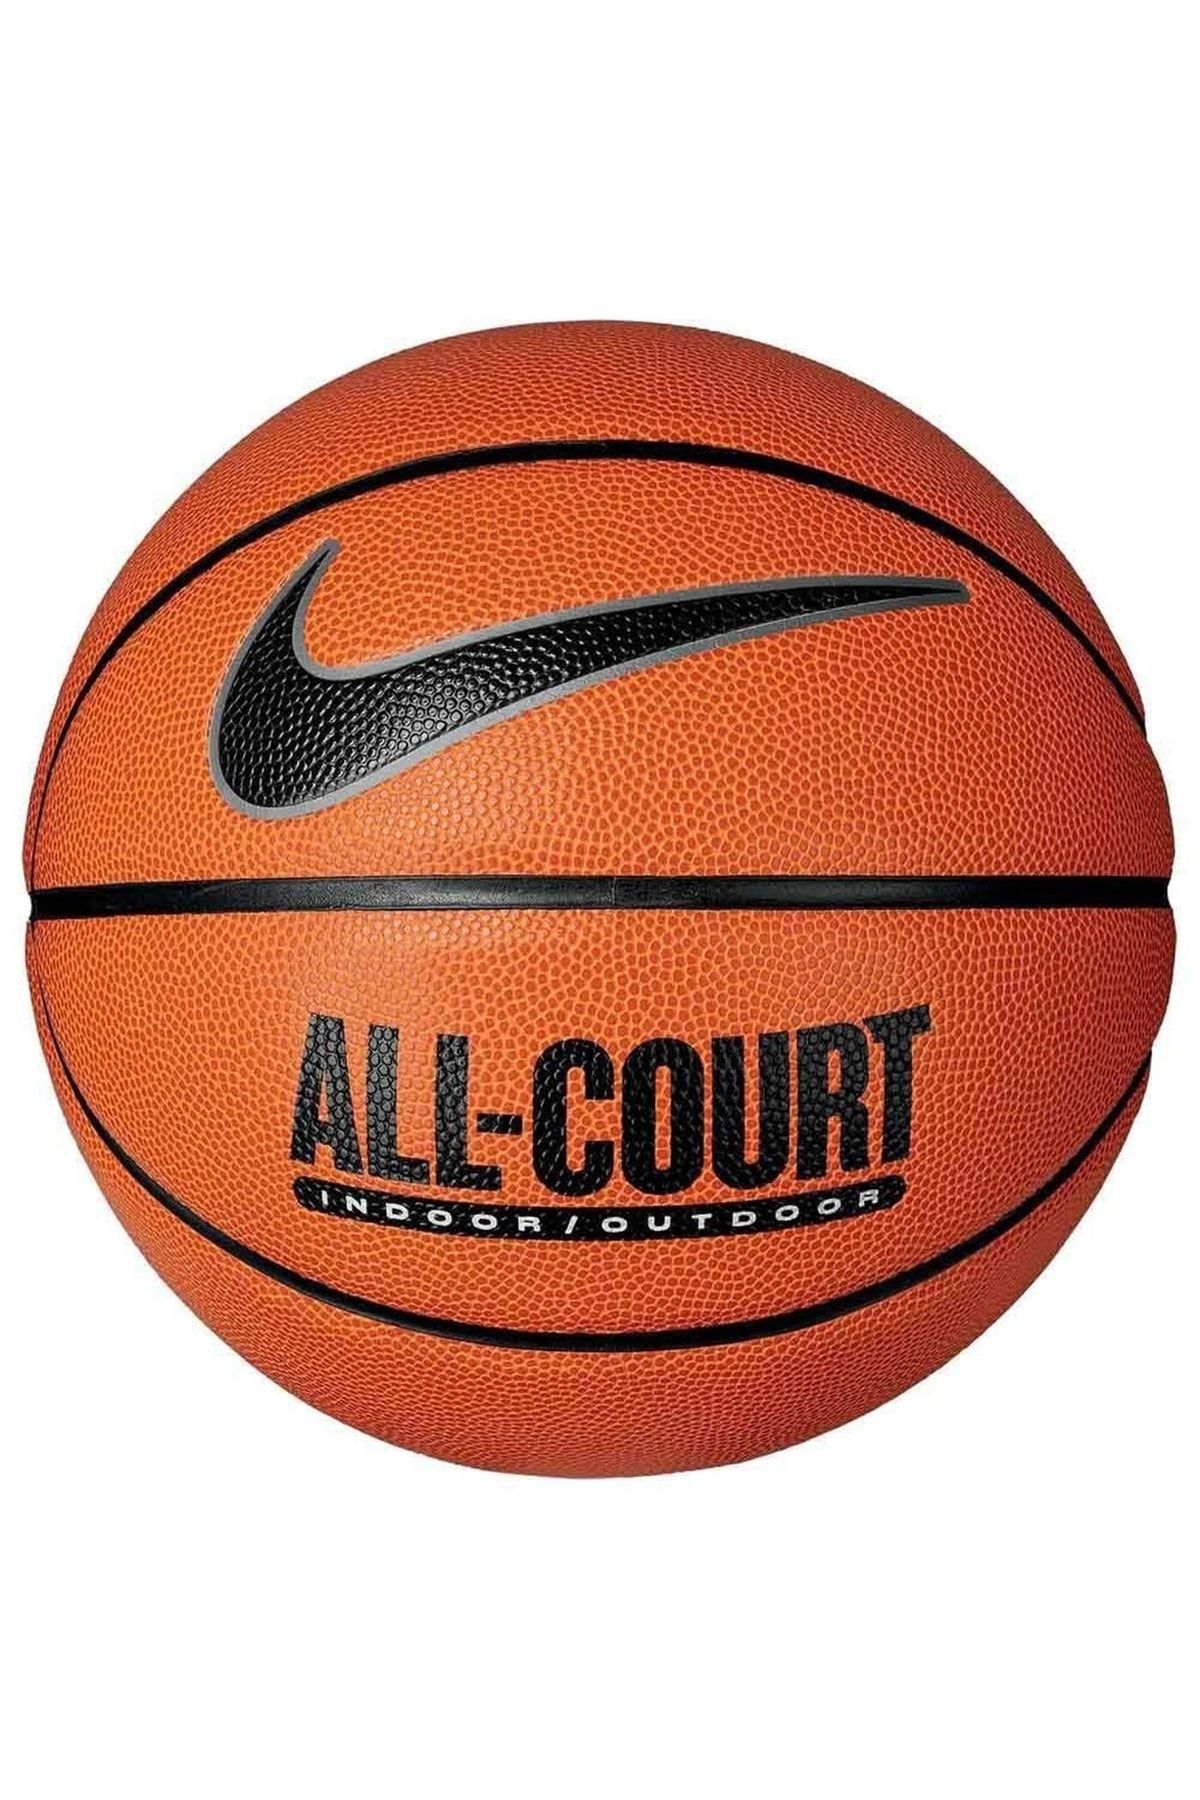 Nike Everyday Basketbol Topu All Court 8p Deflated Basketbol Topu